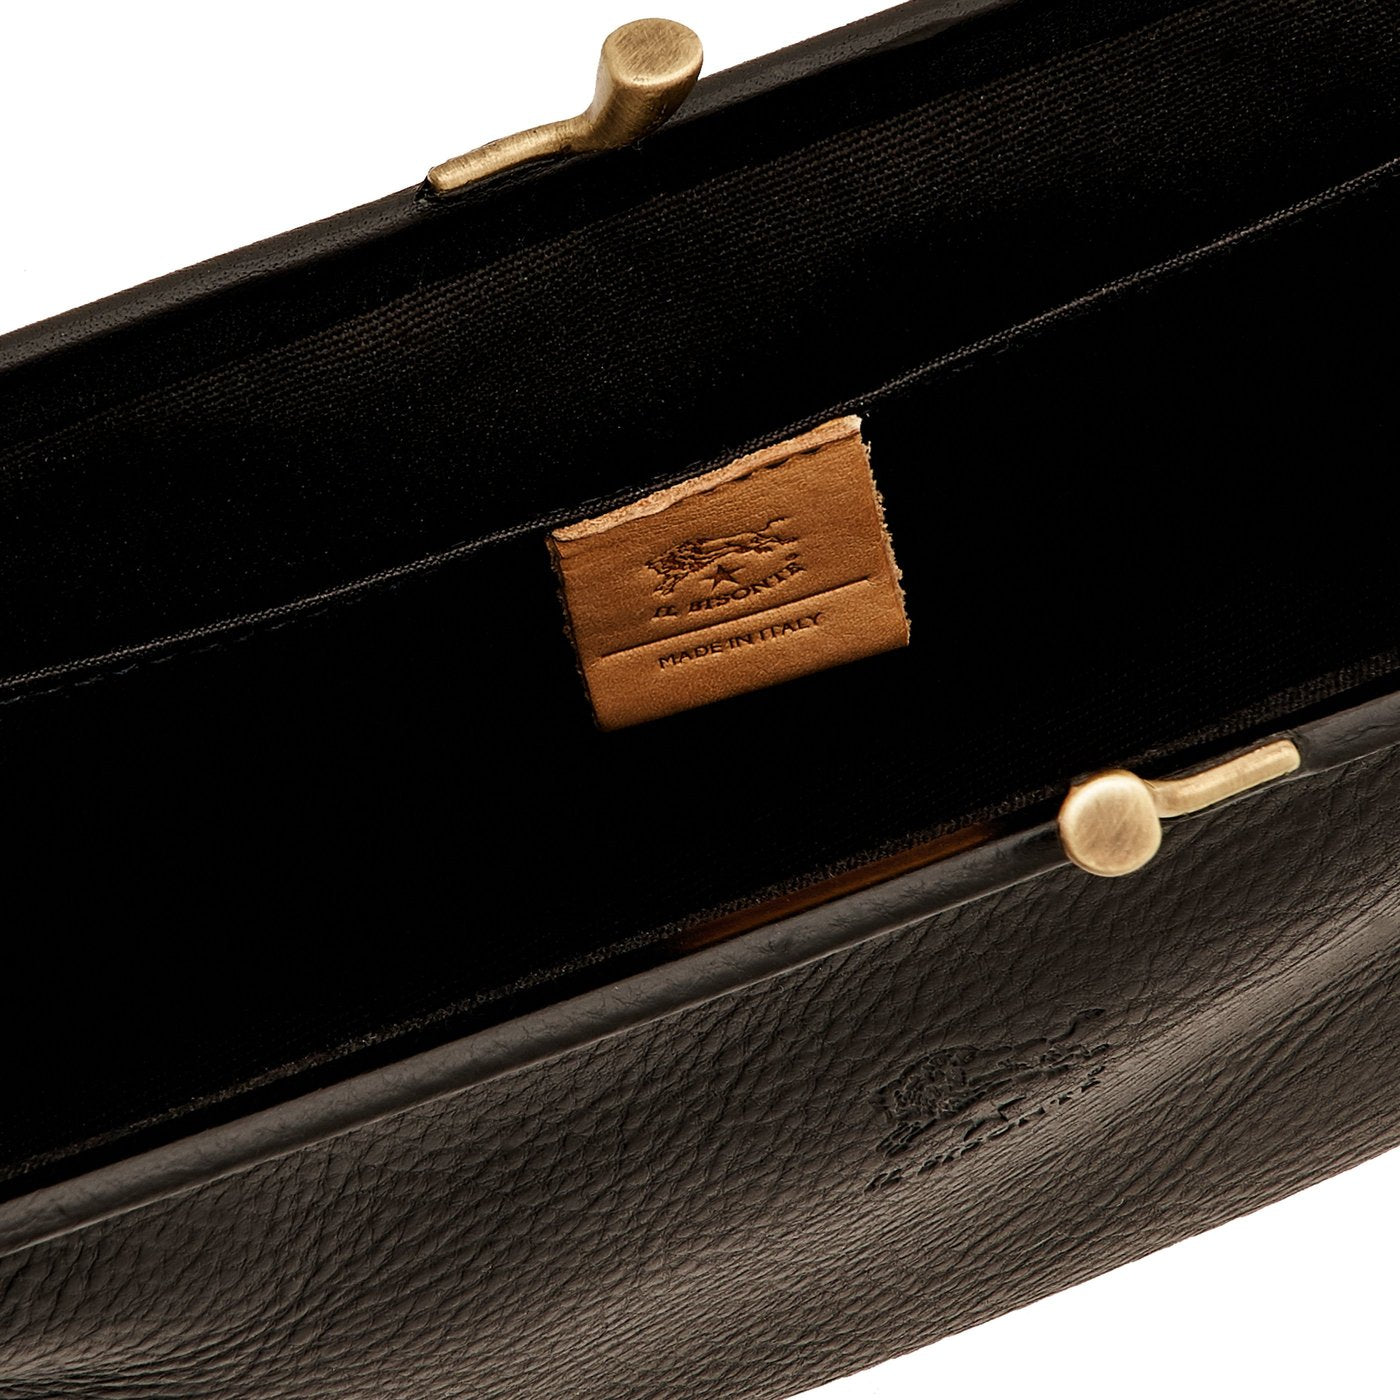 Brand Clutch Bags Men Italy, Mens Louis Vuitton Clutch